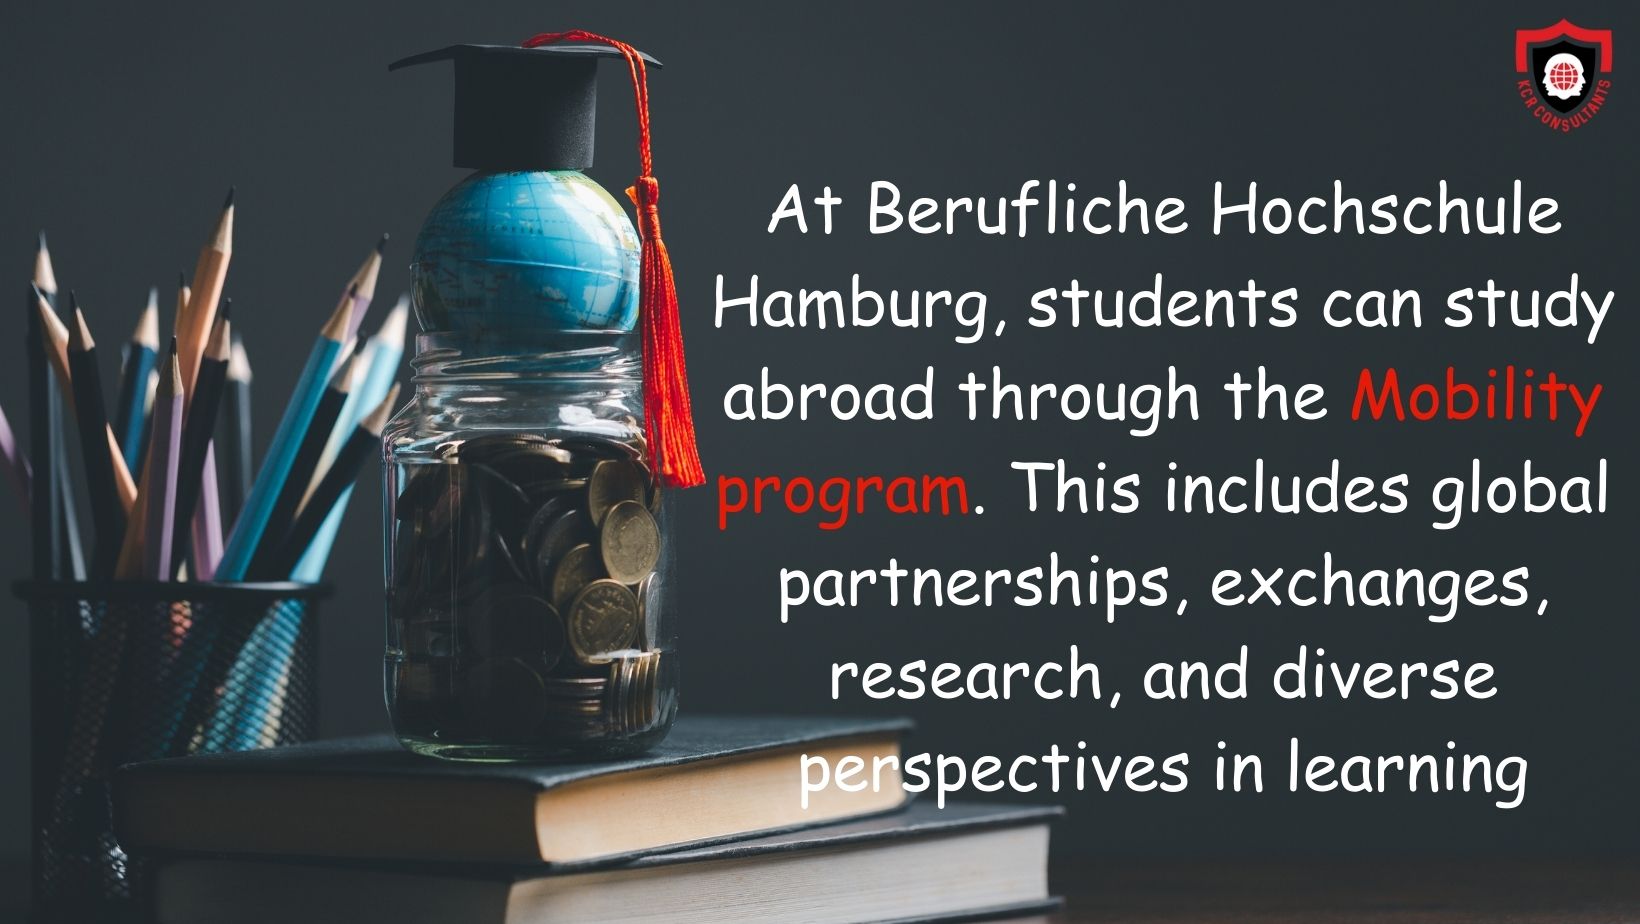 Berufliche Hochschule Hamburg - Mobility program